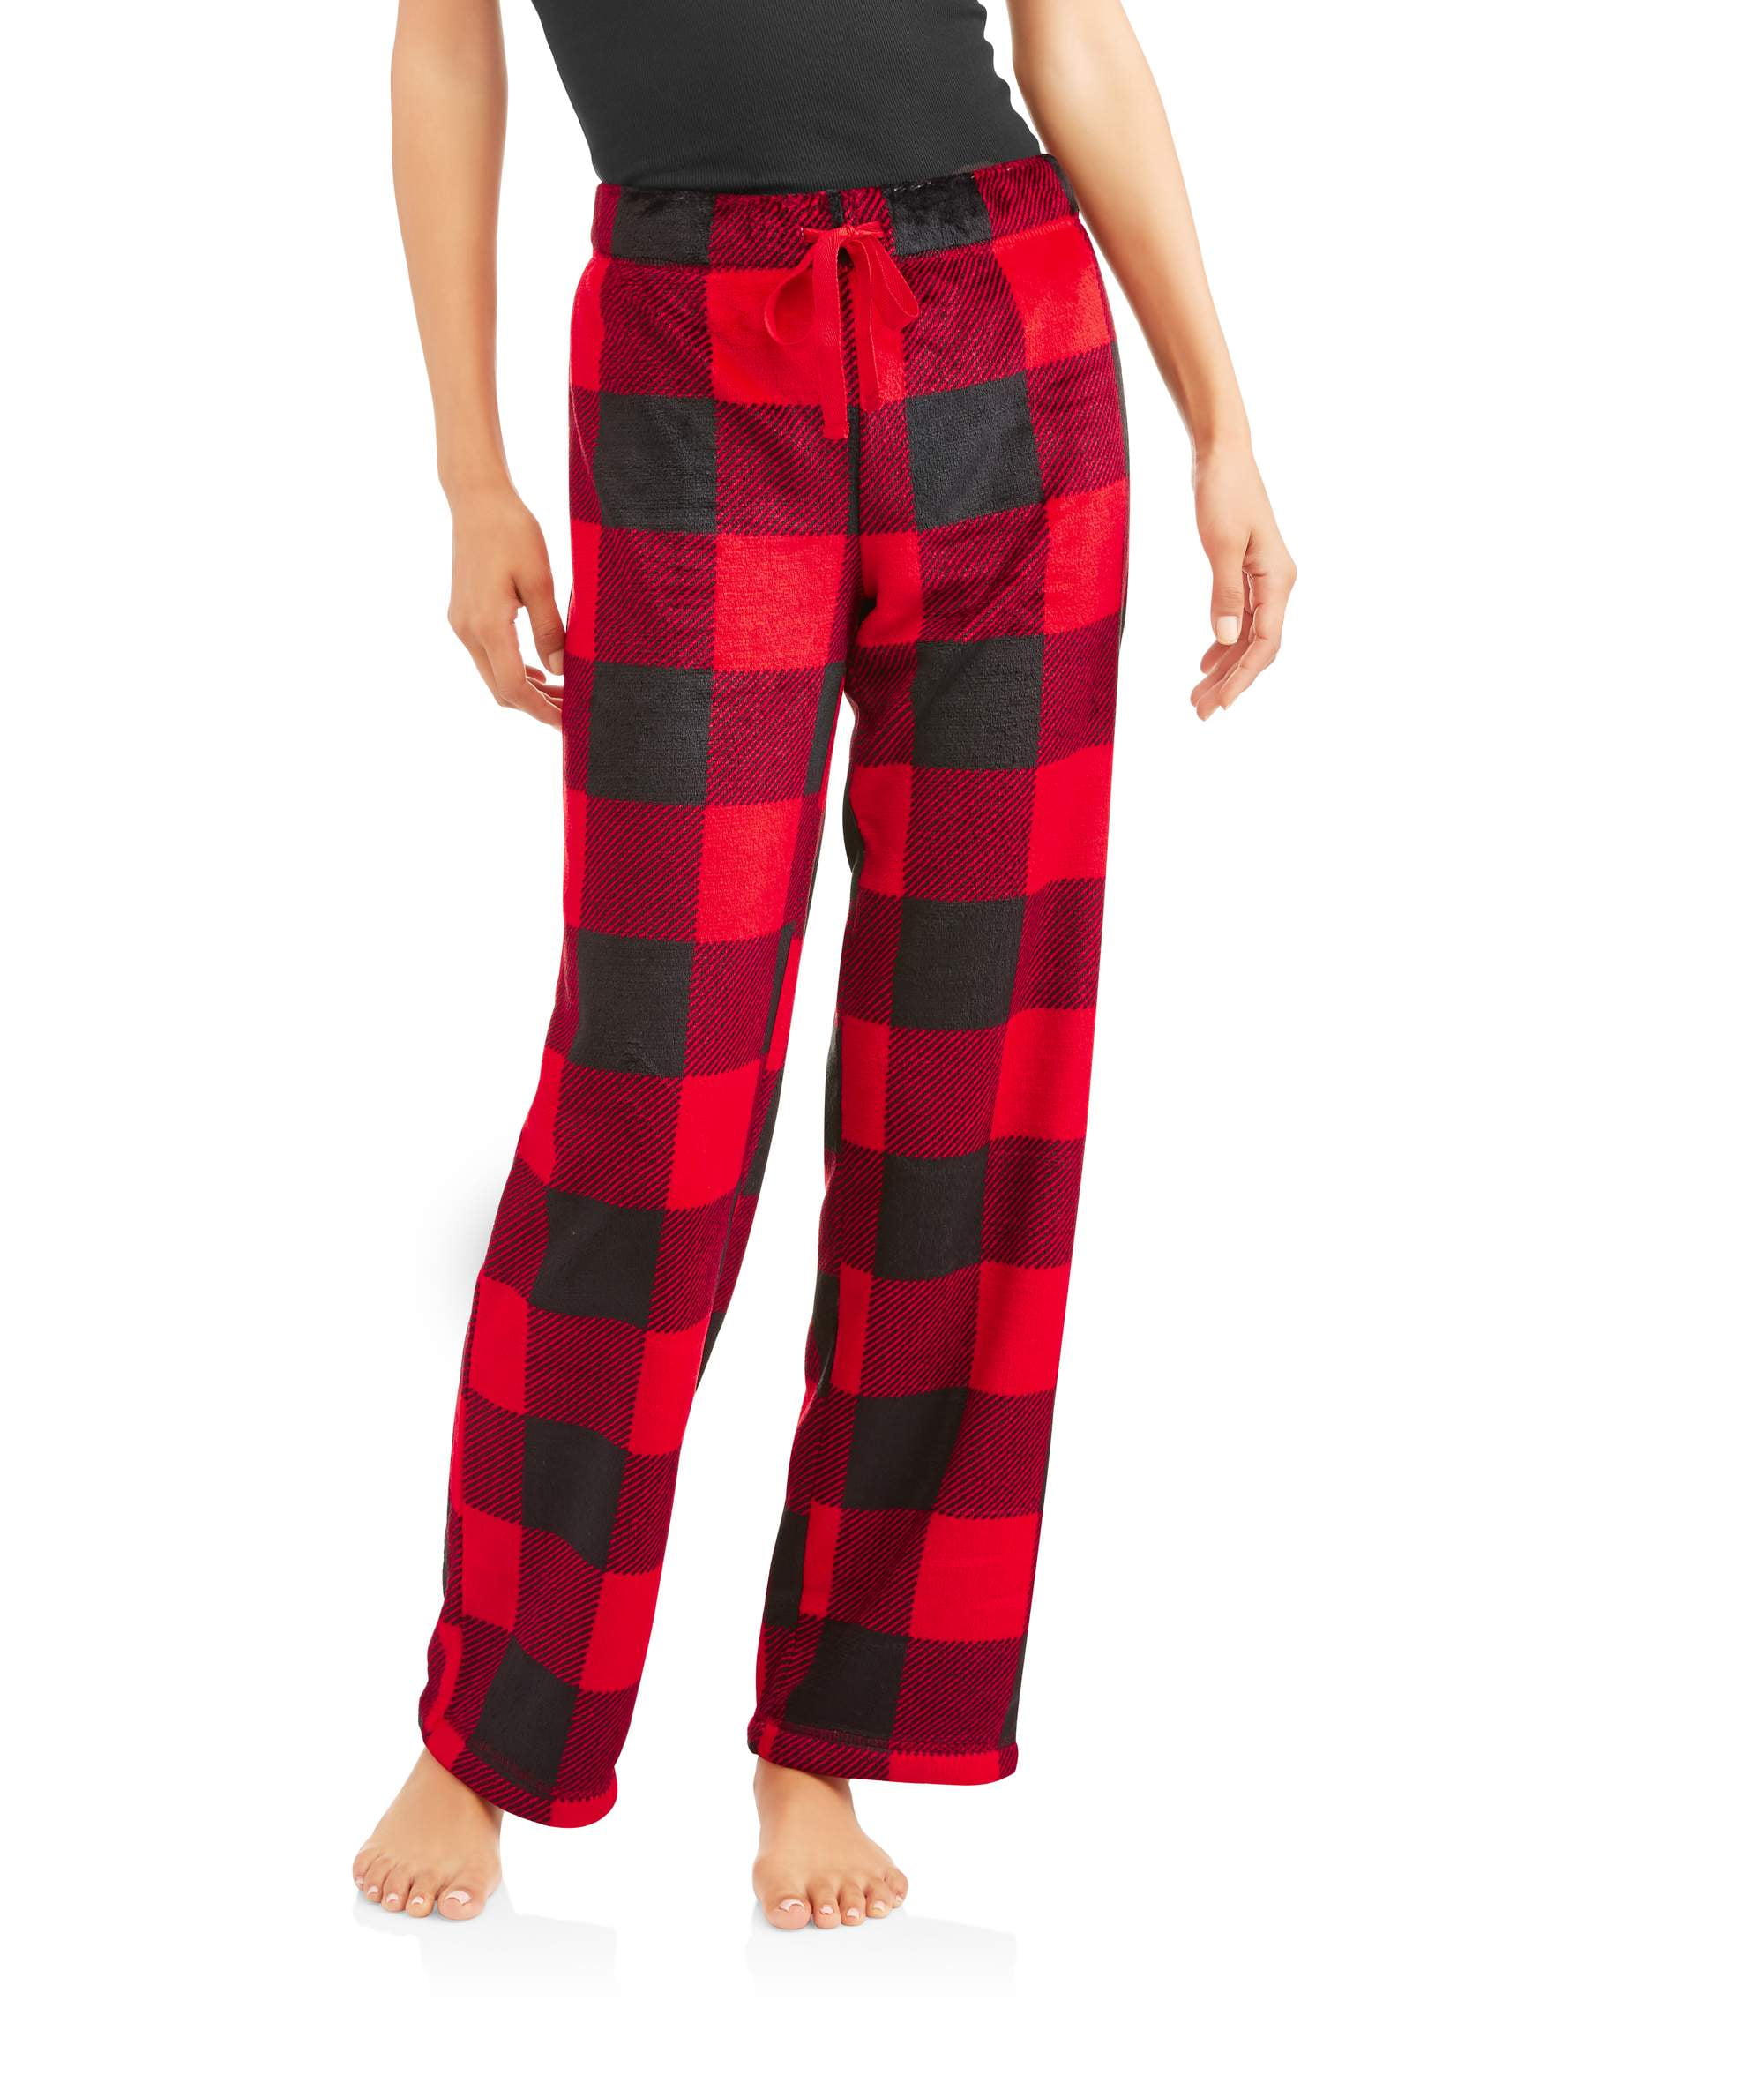 Women's Super Minky Plush Pajama Sleep Pants - Walmart.com